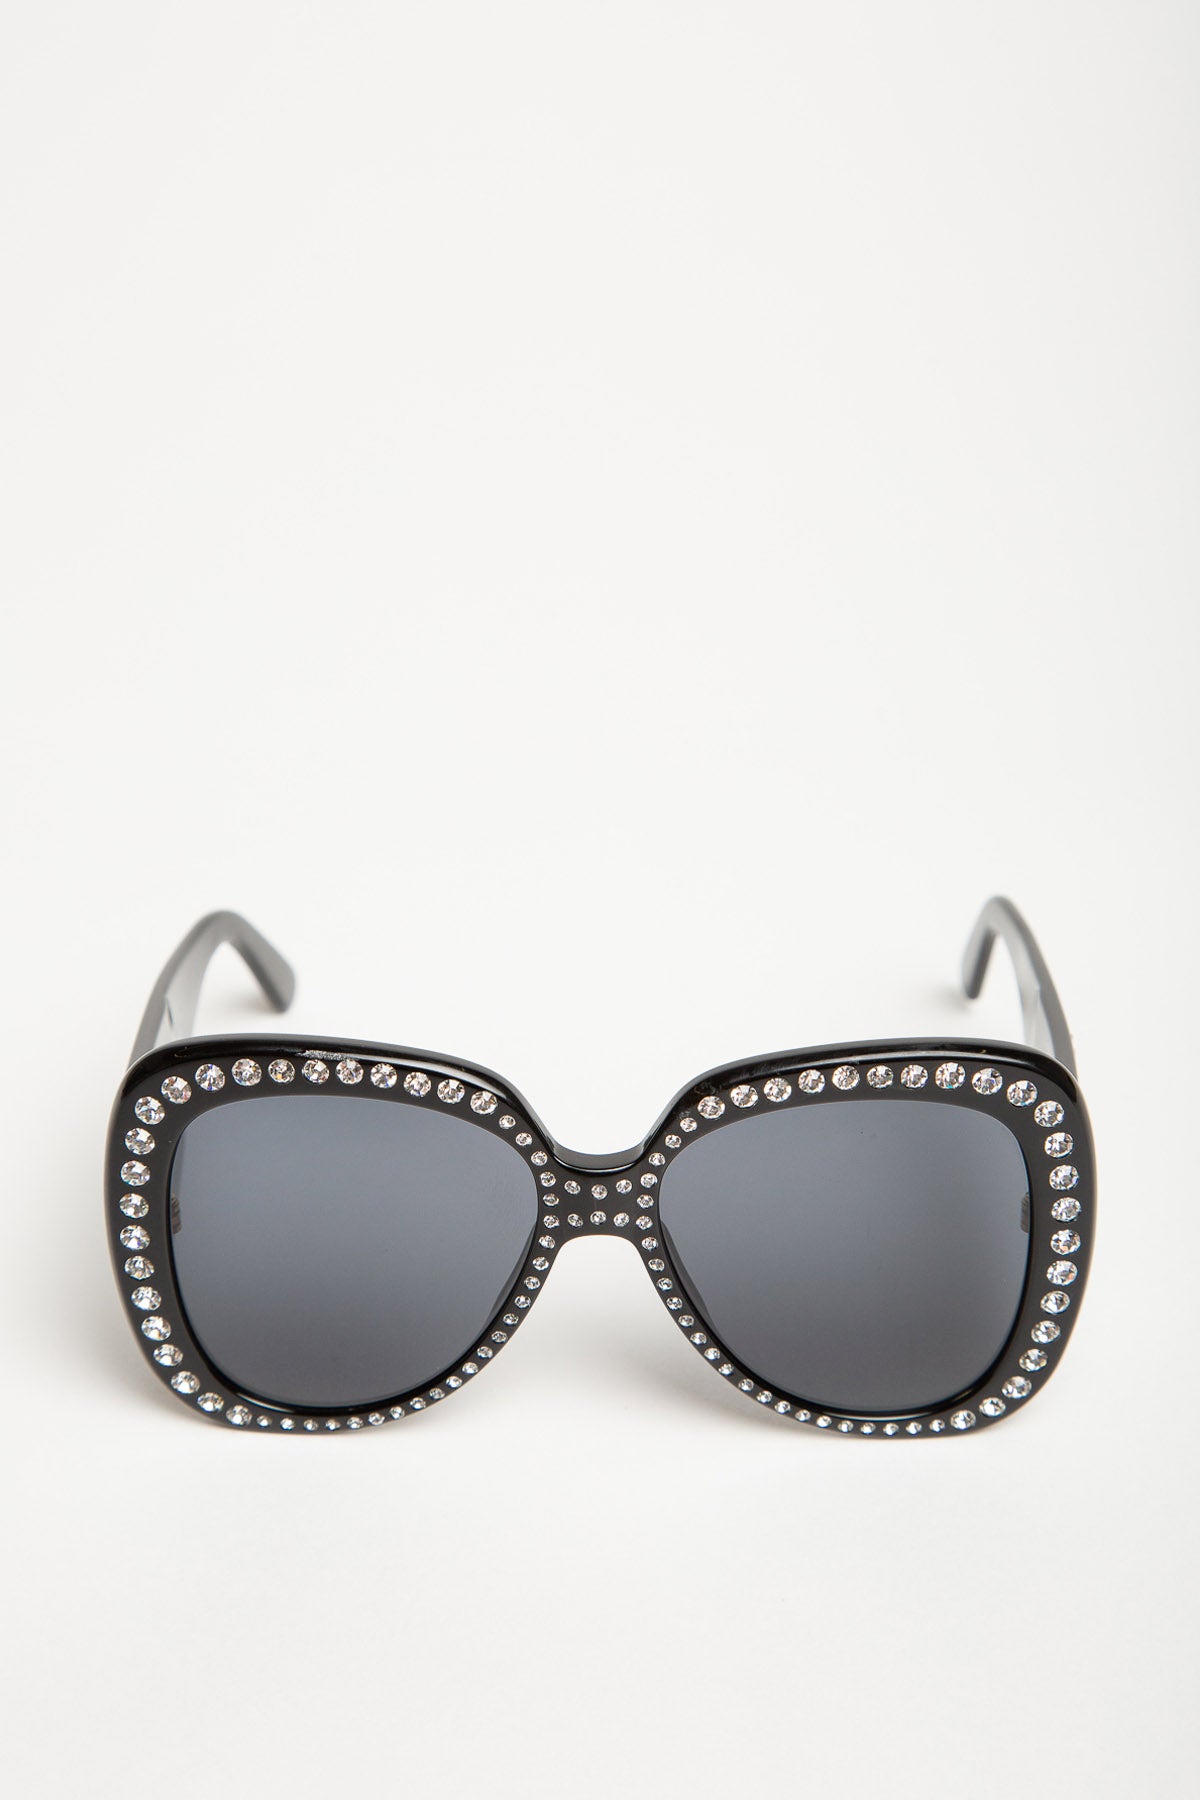 Chanel Spring 1995 Runway Black White Sunglasses